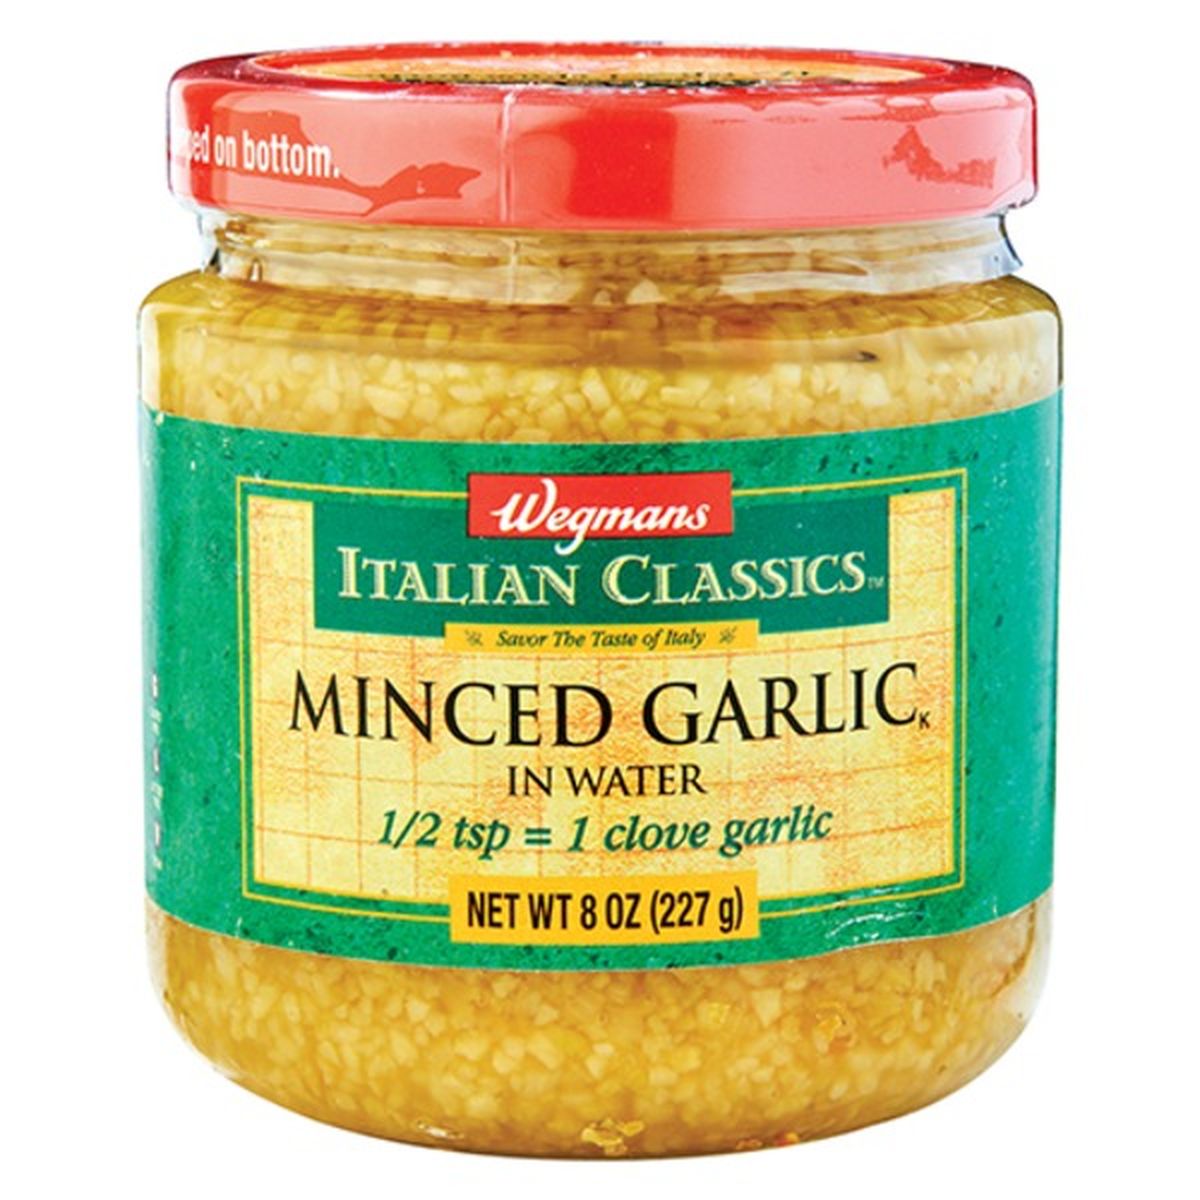 Calories in Wegmans Italian Classics Garlic, Minced, in Water